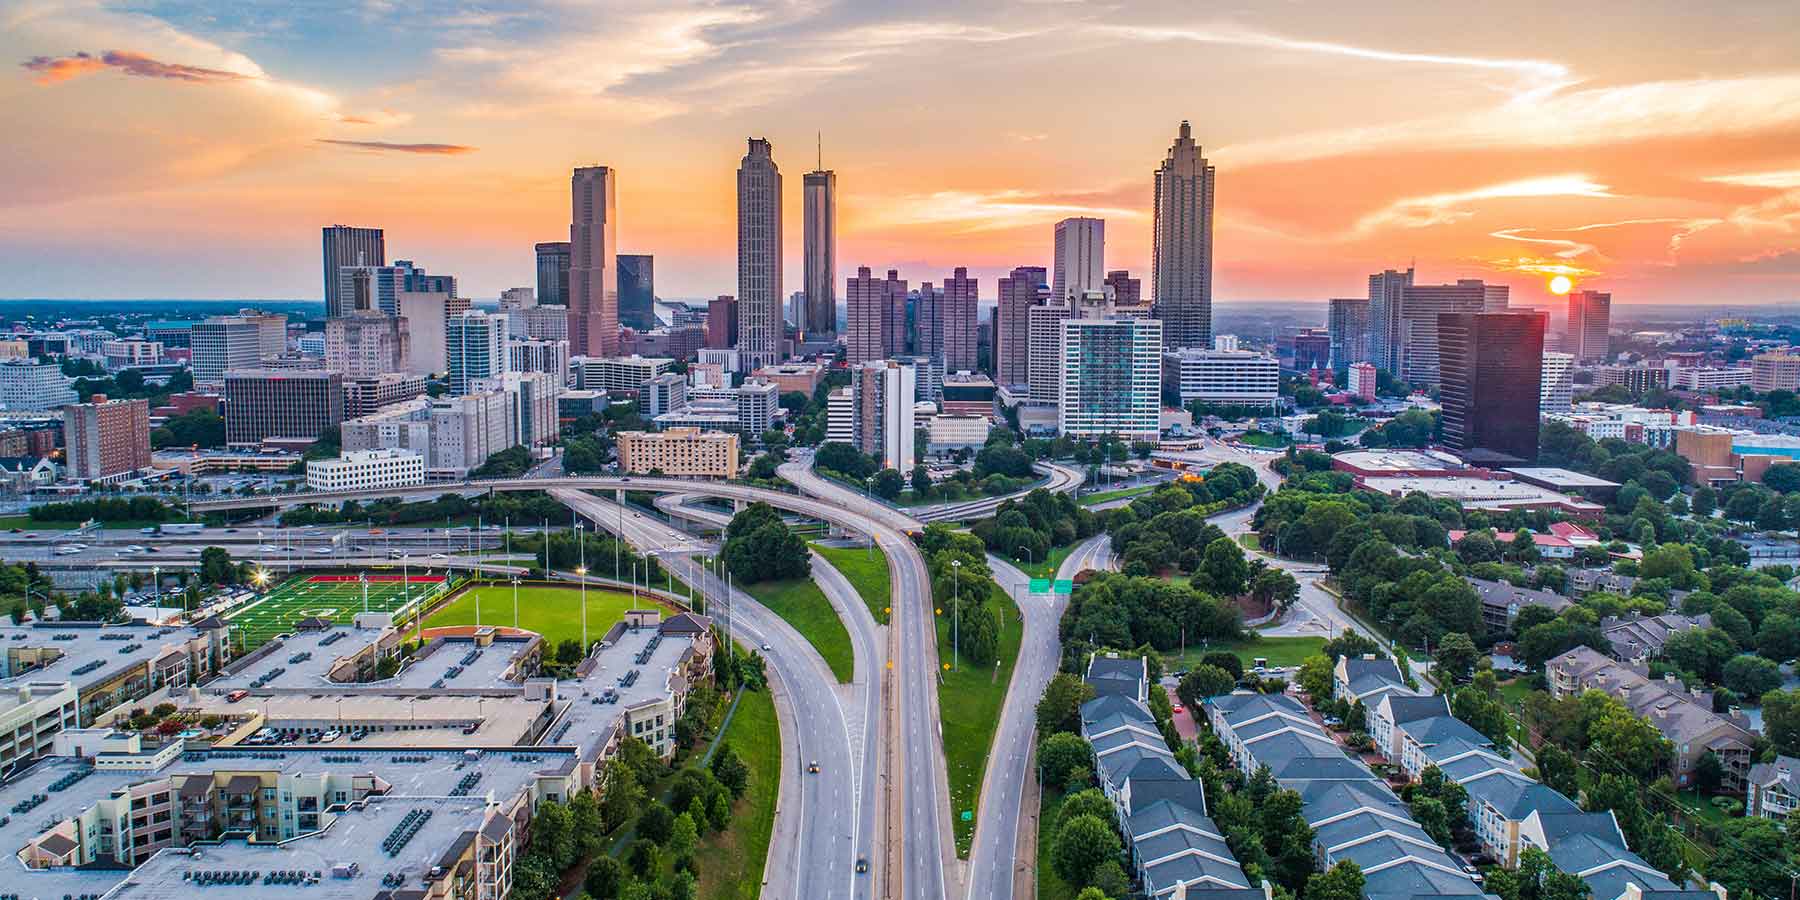 Atlanta, GA (ATL) Background